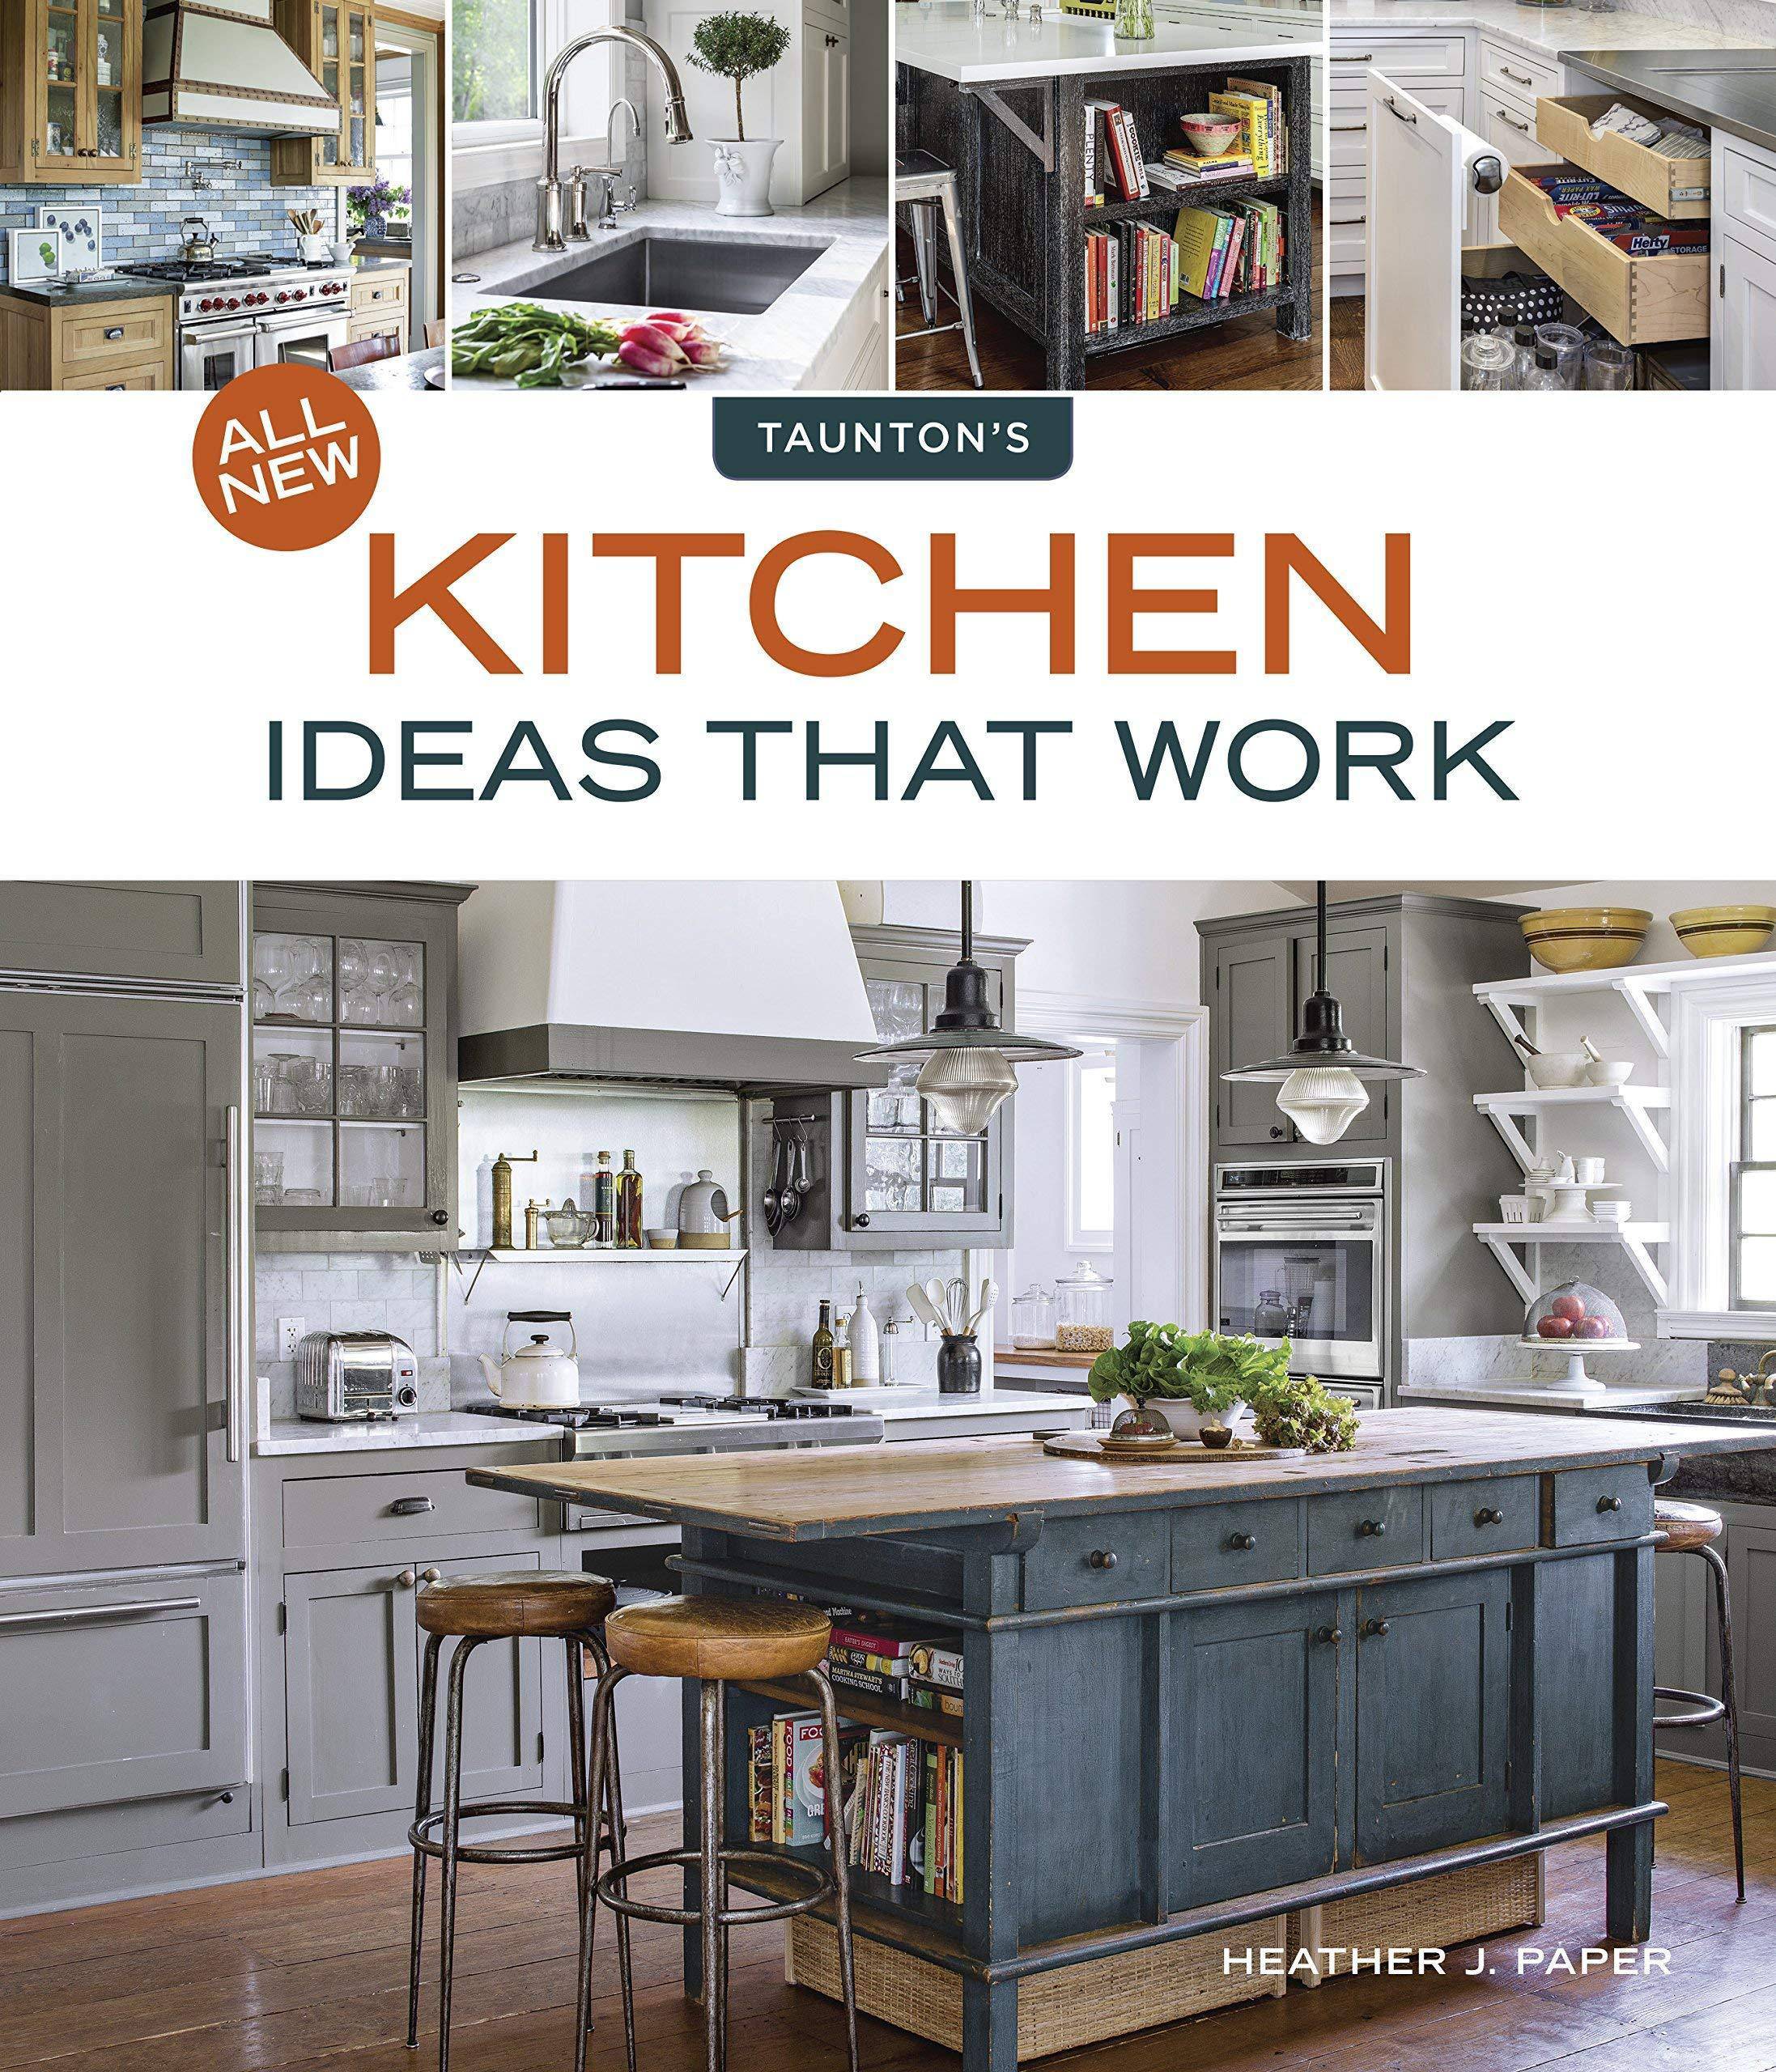 All New Kitchen Ideas that Work - SureShot Books Publishing LLC